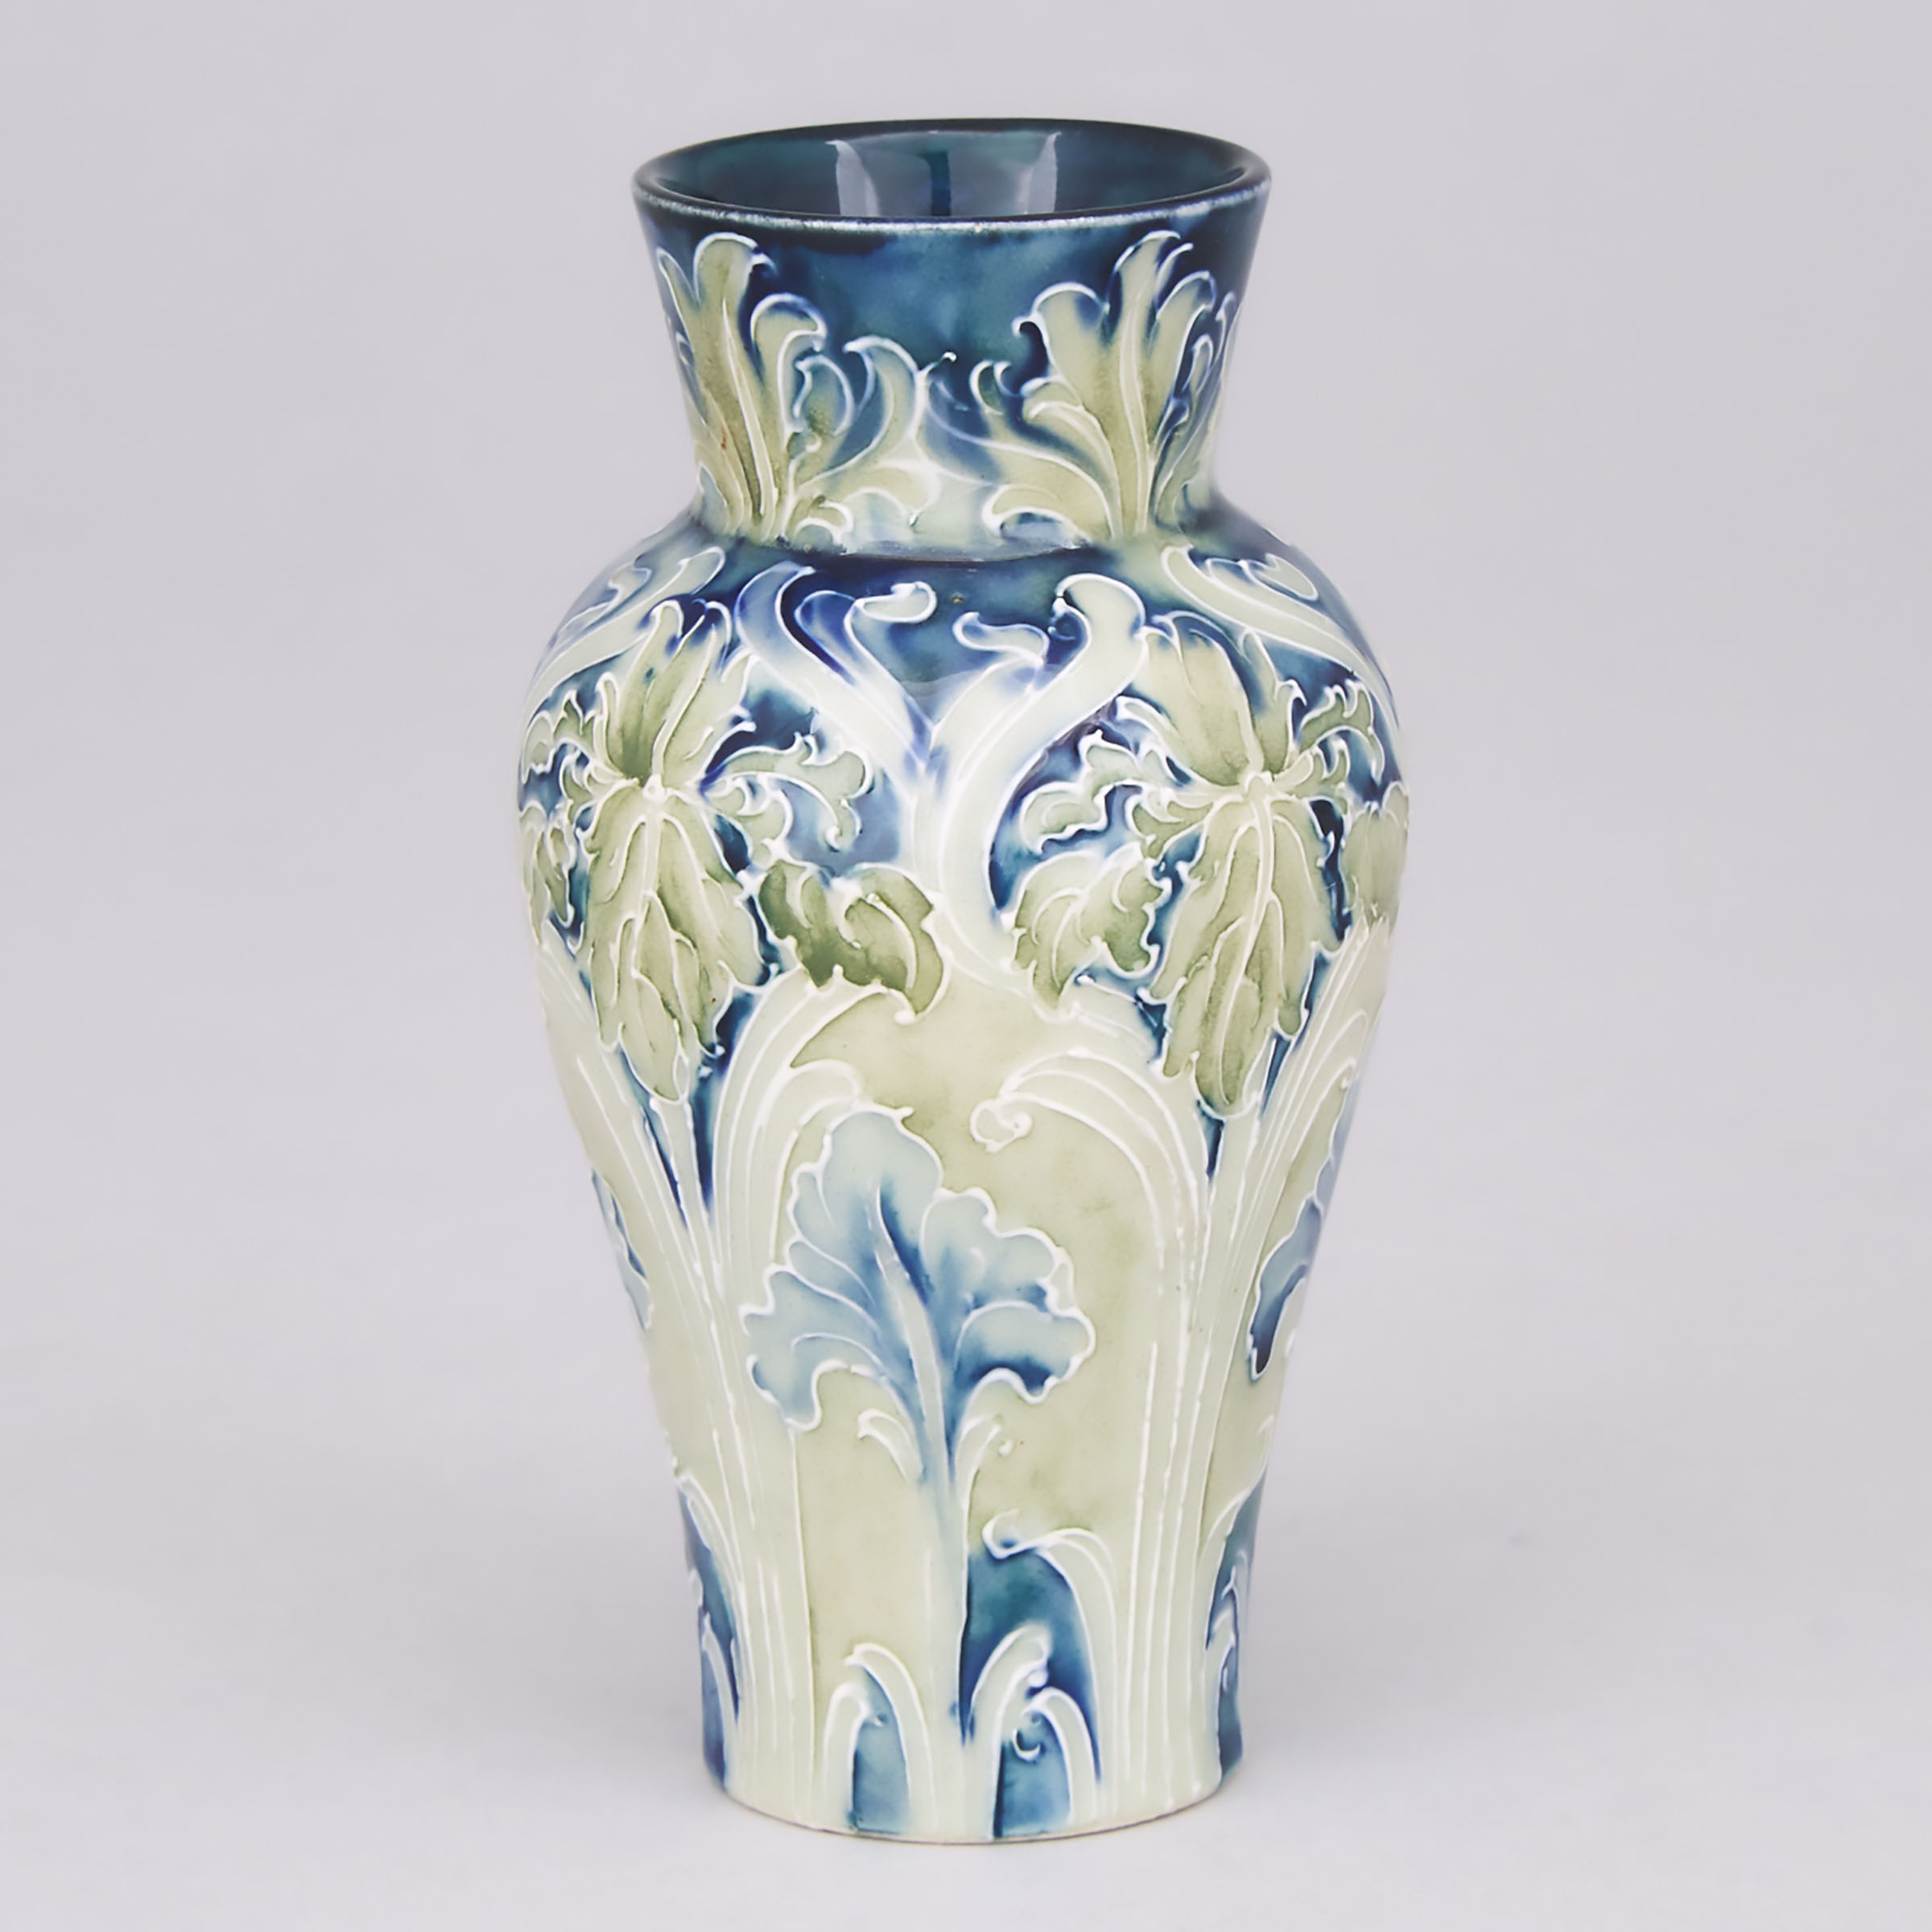 Macintyre Moorcroft Florian Small Vase, c.1900